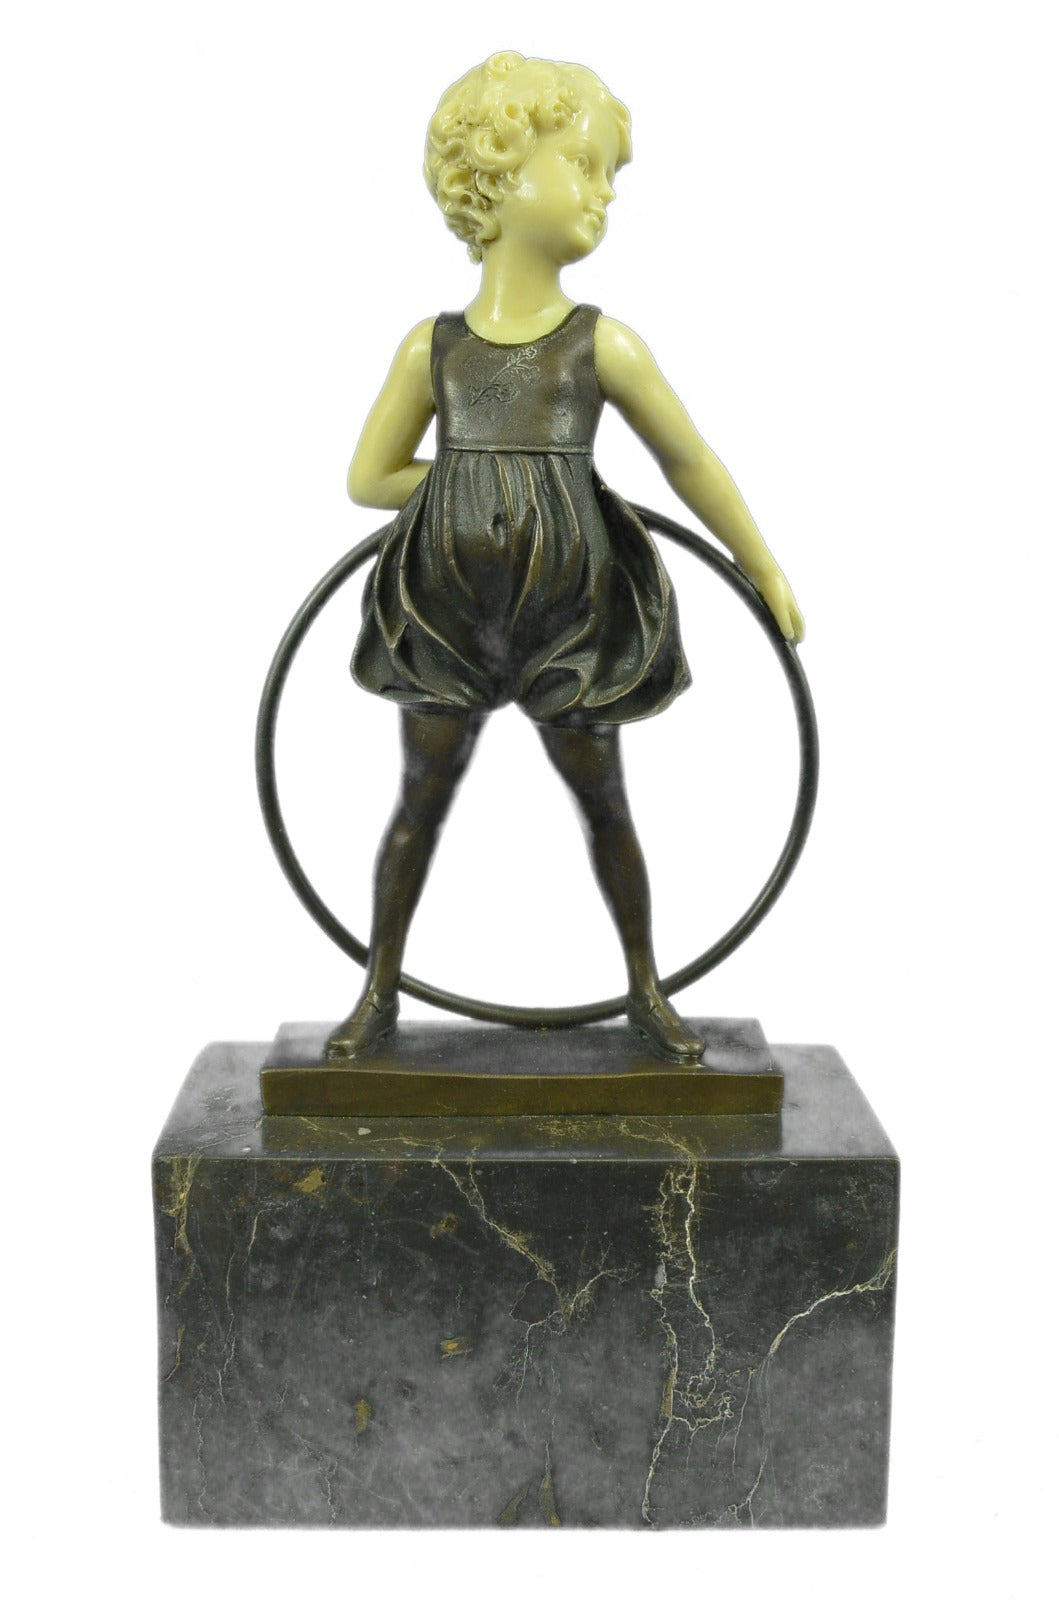 Art Deco Baby School Girl Playing Bronze Sculpture with Gift Figurine Decor